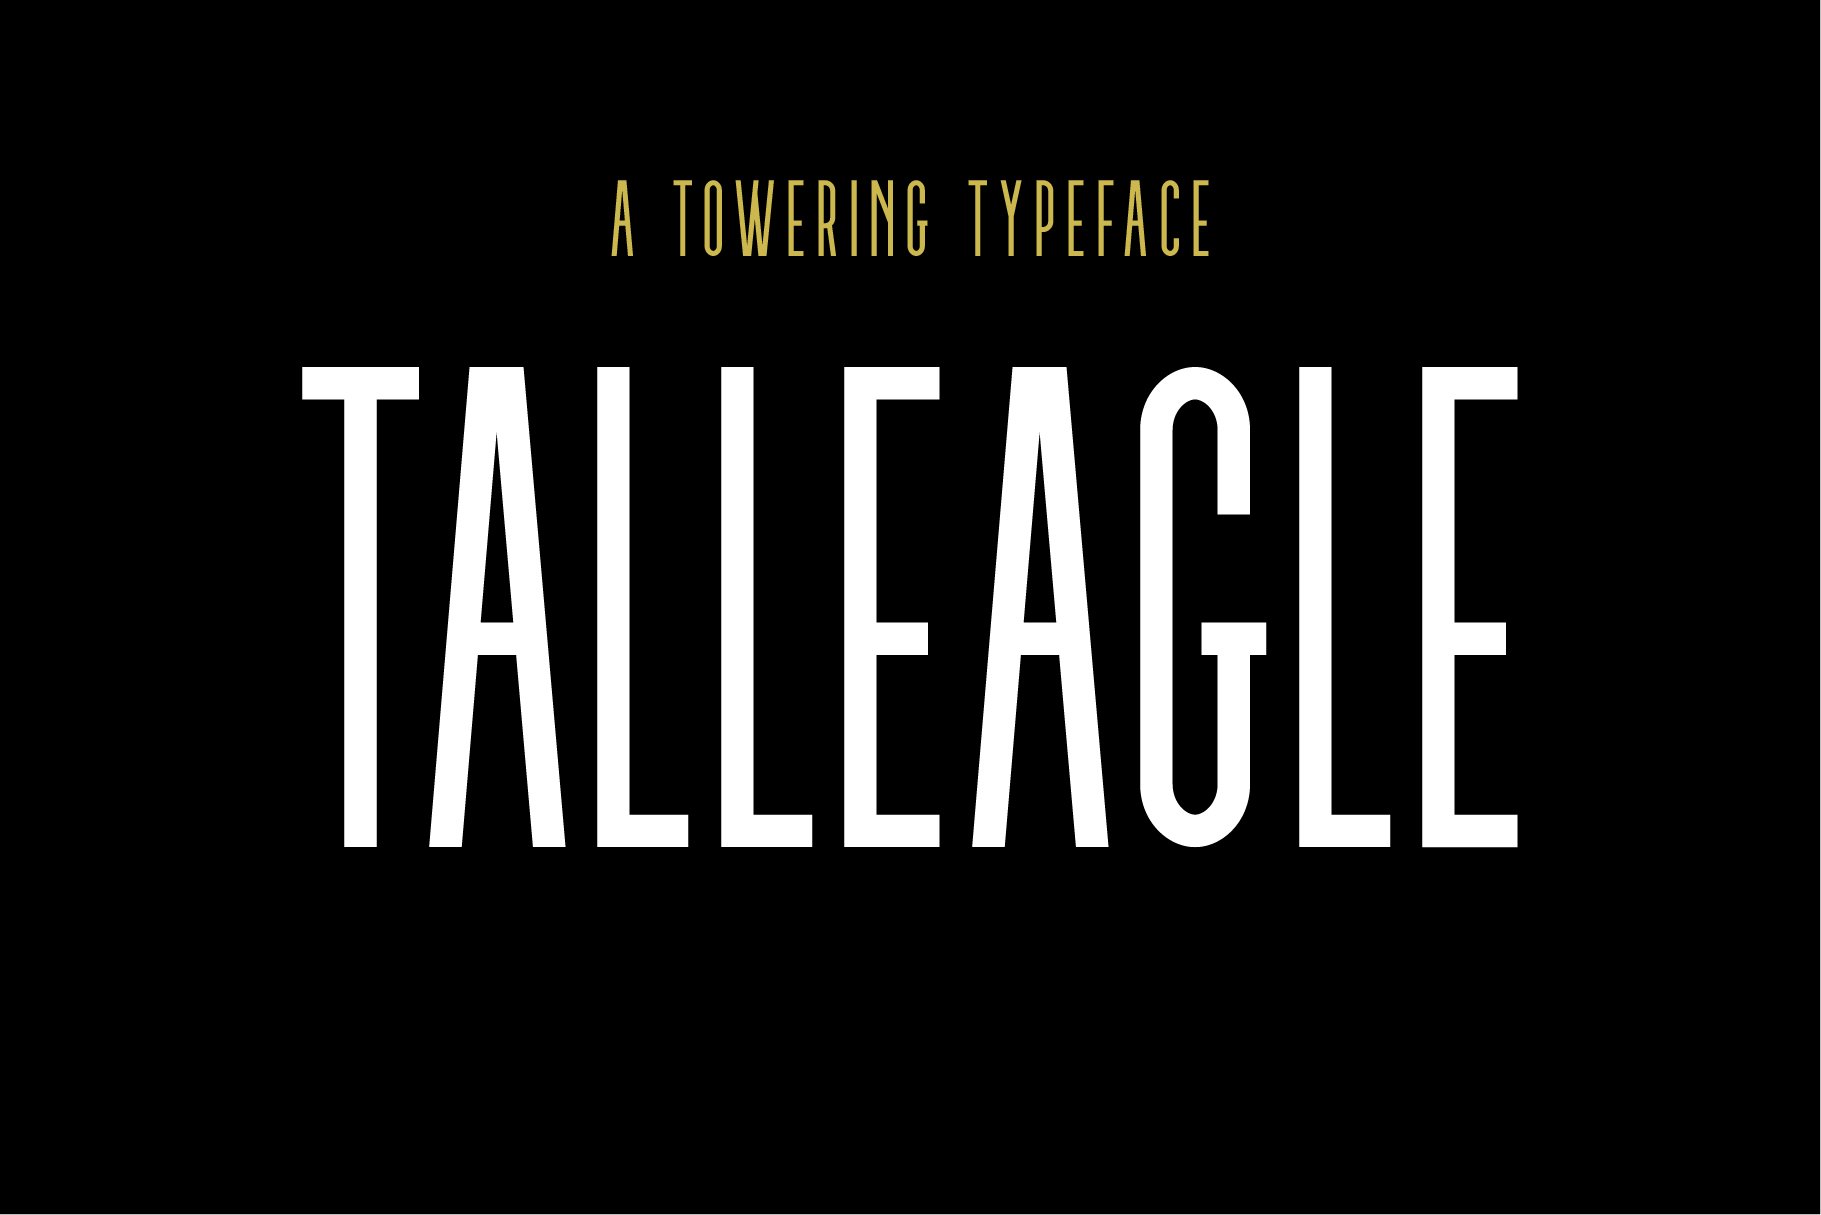 TallEagle cover image.